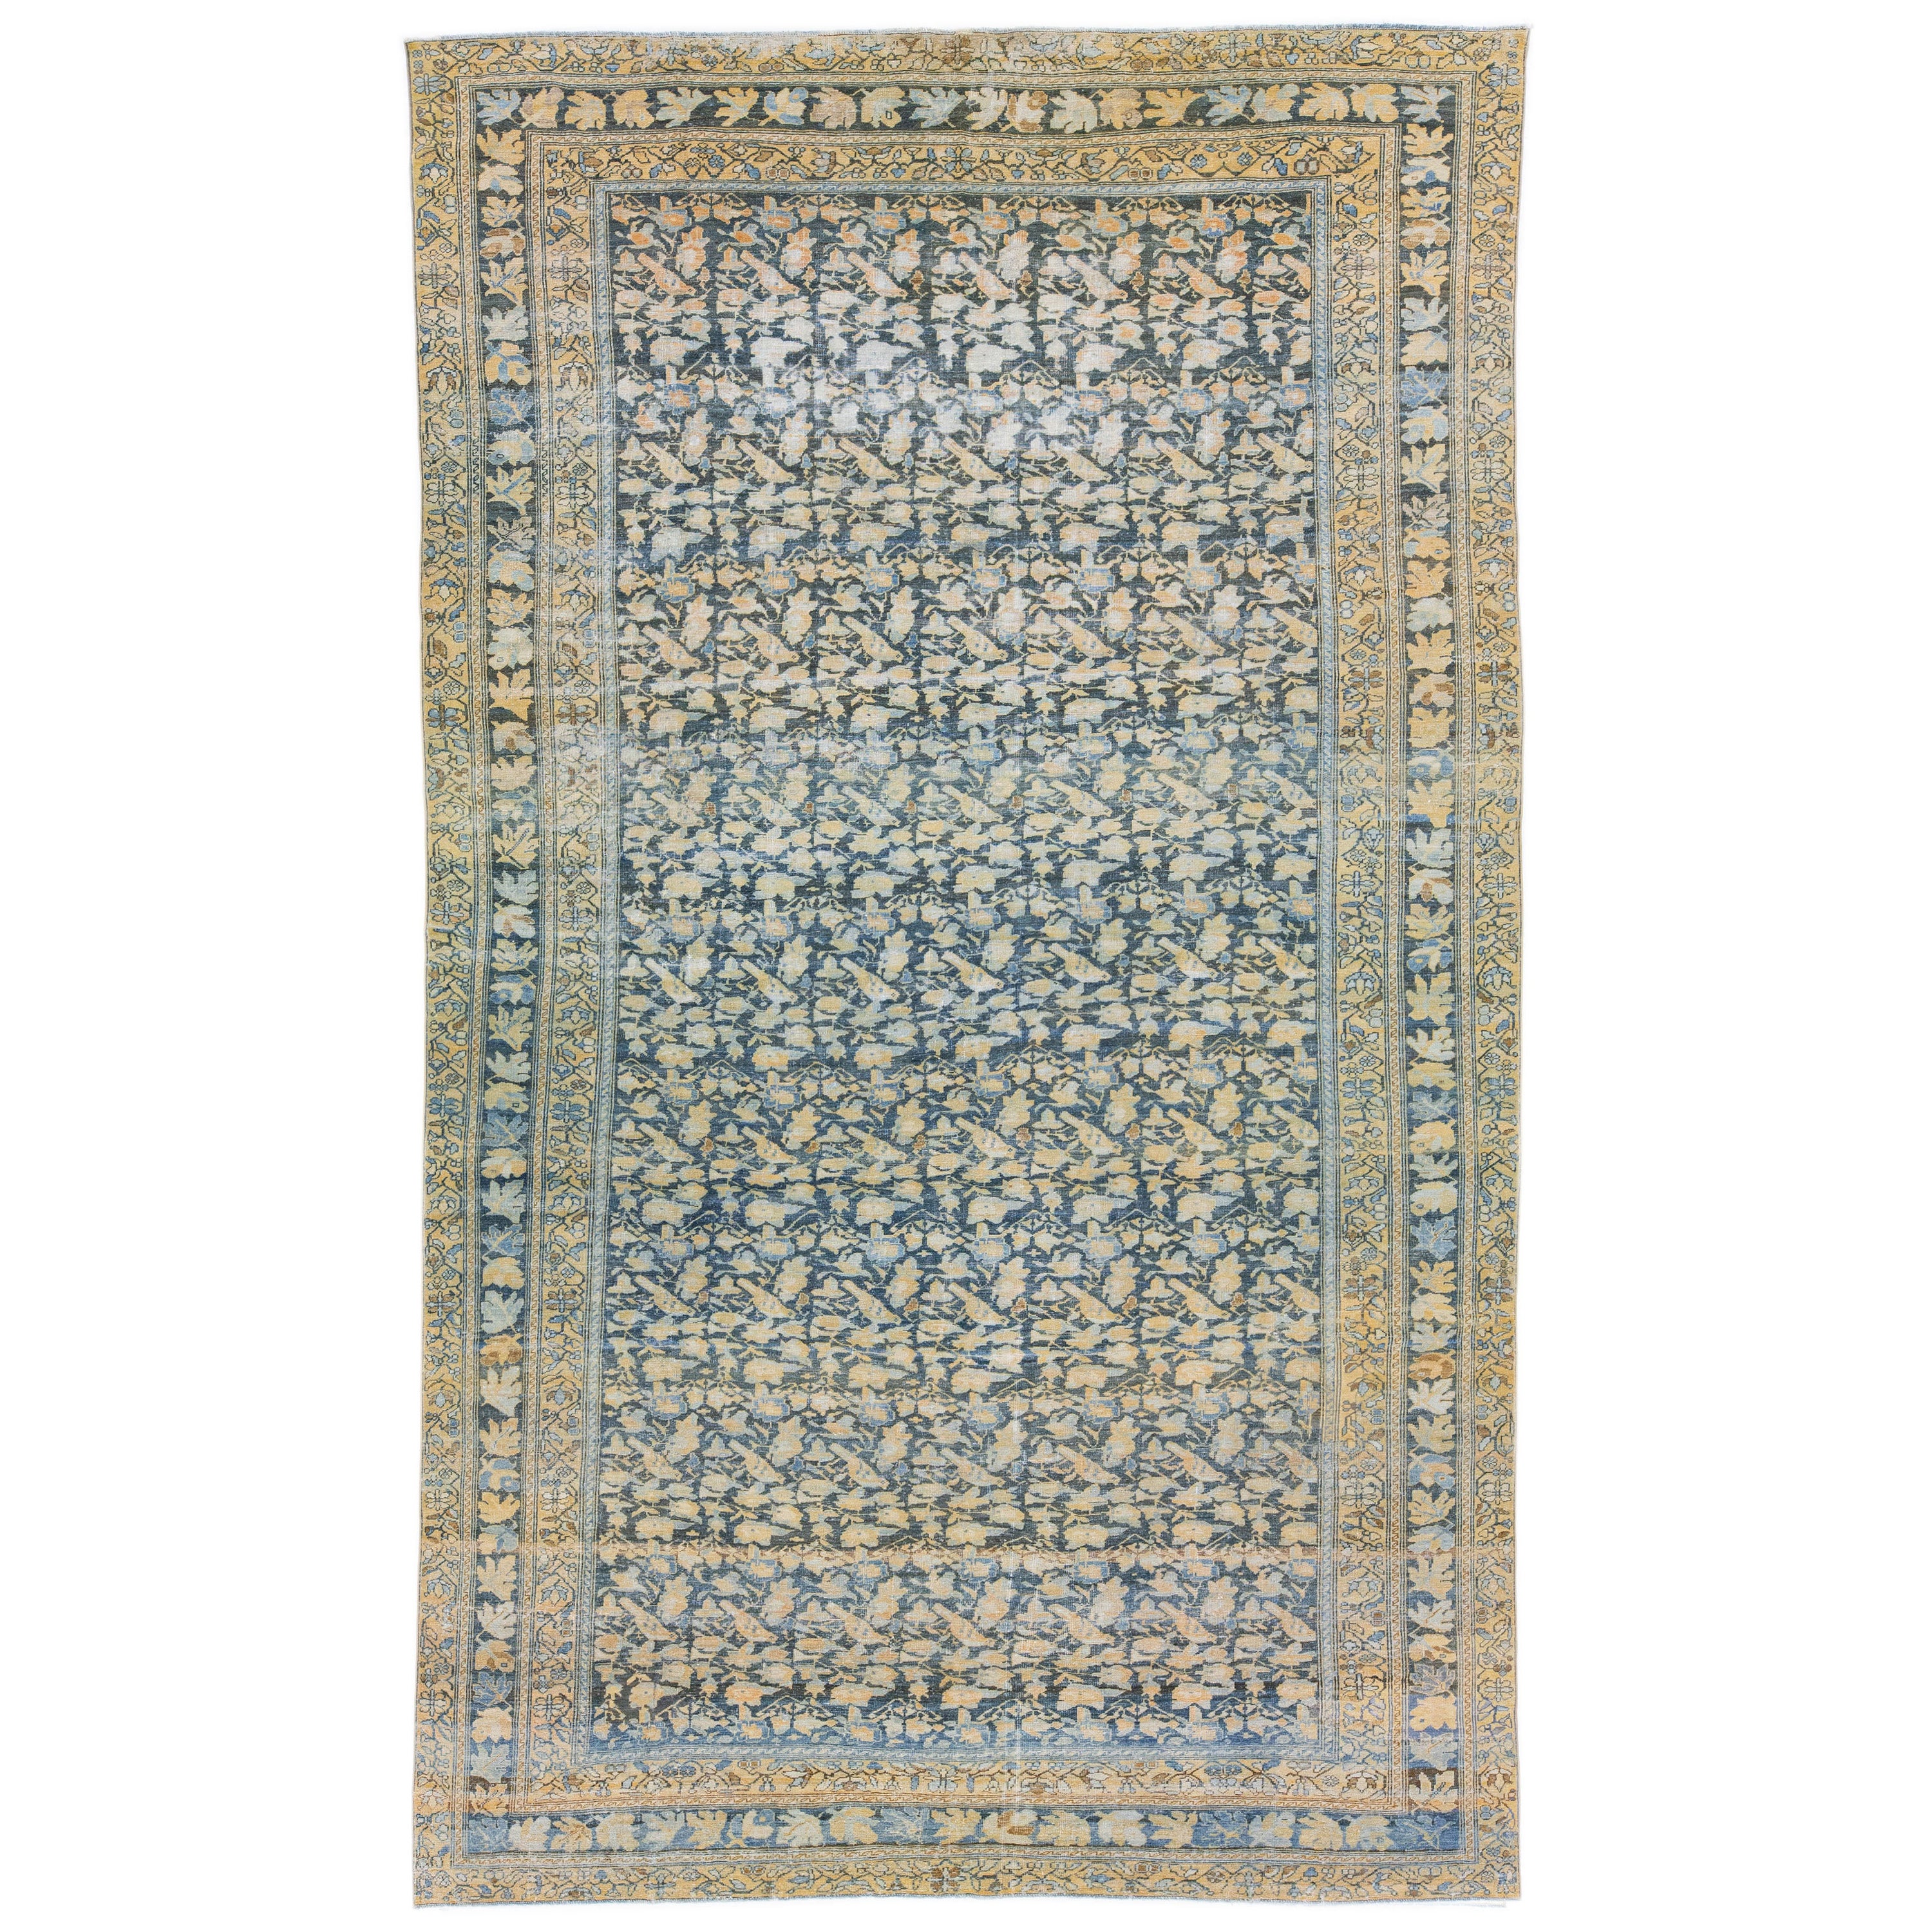 Antique Sarouk Farahan Persian Blue Handmade Floral Motif  Wool Rug